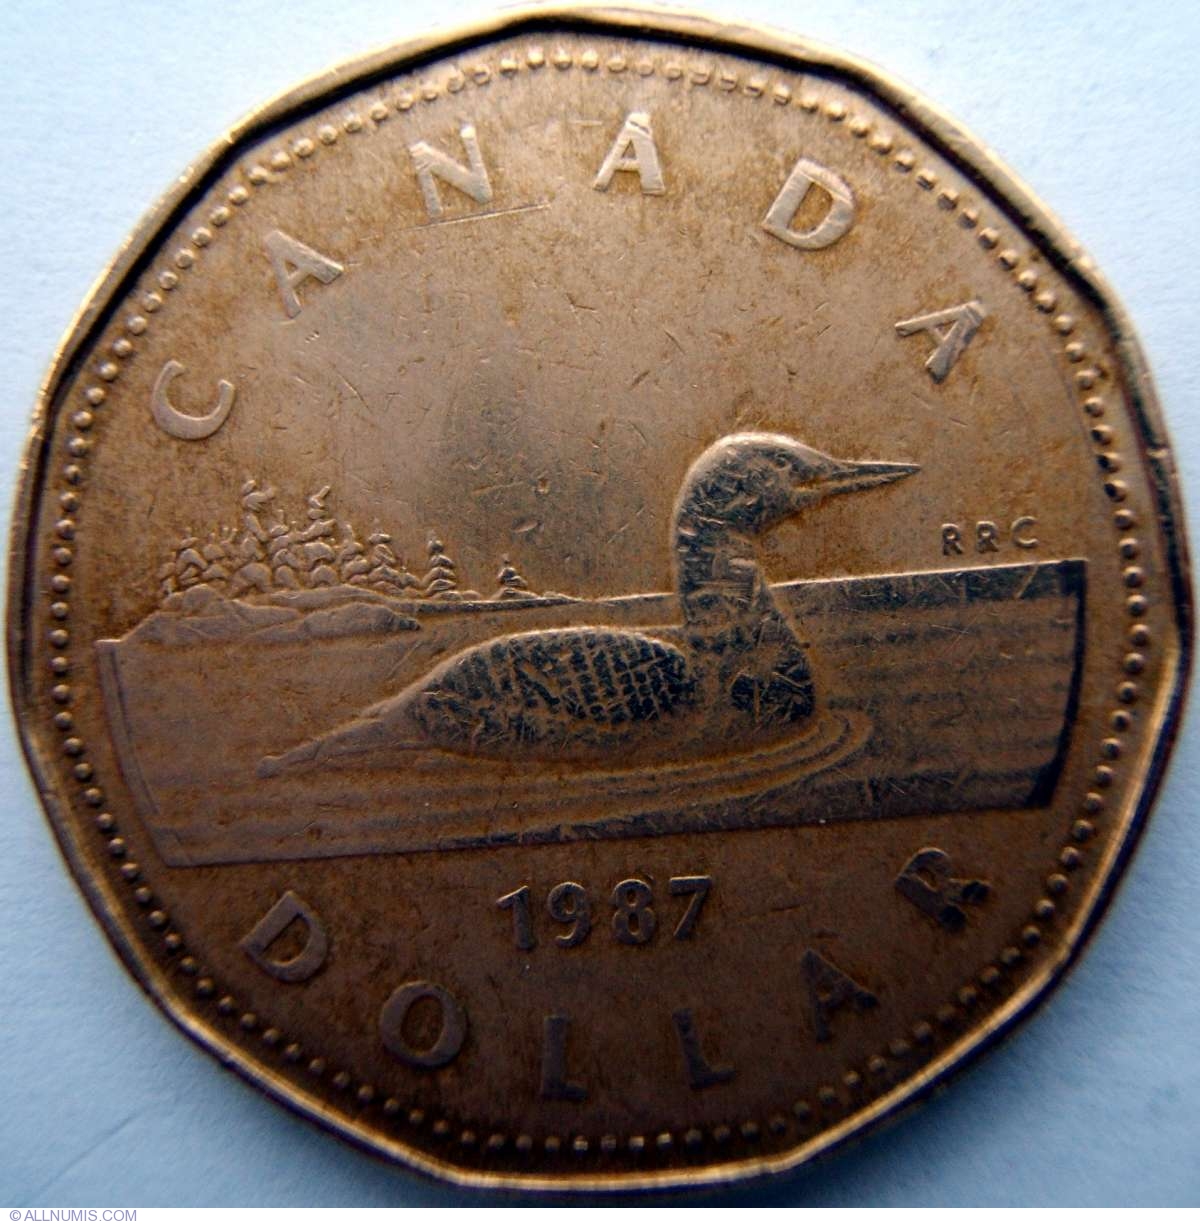 1987 one dollar coin